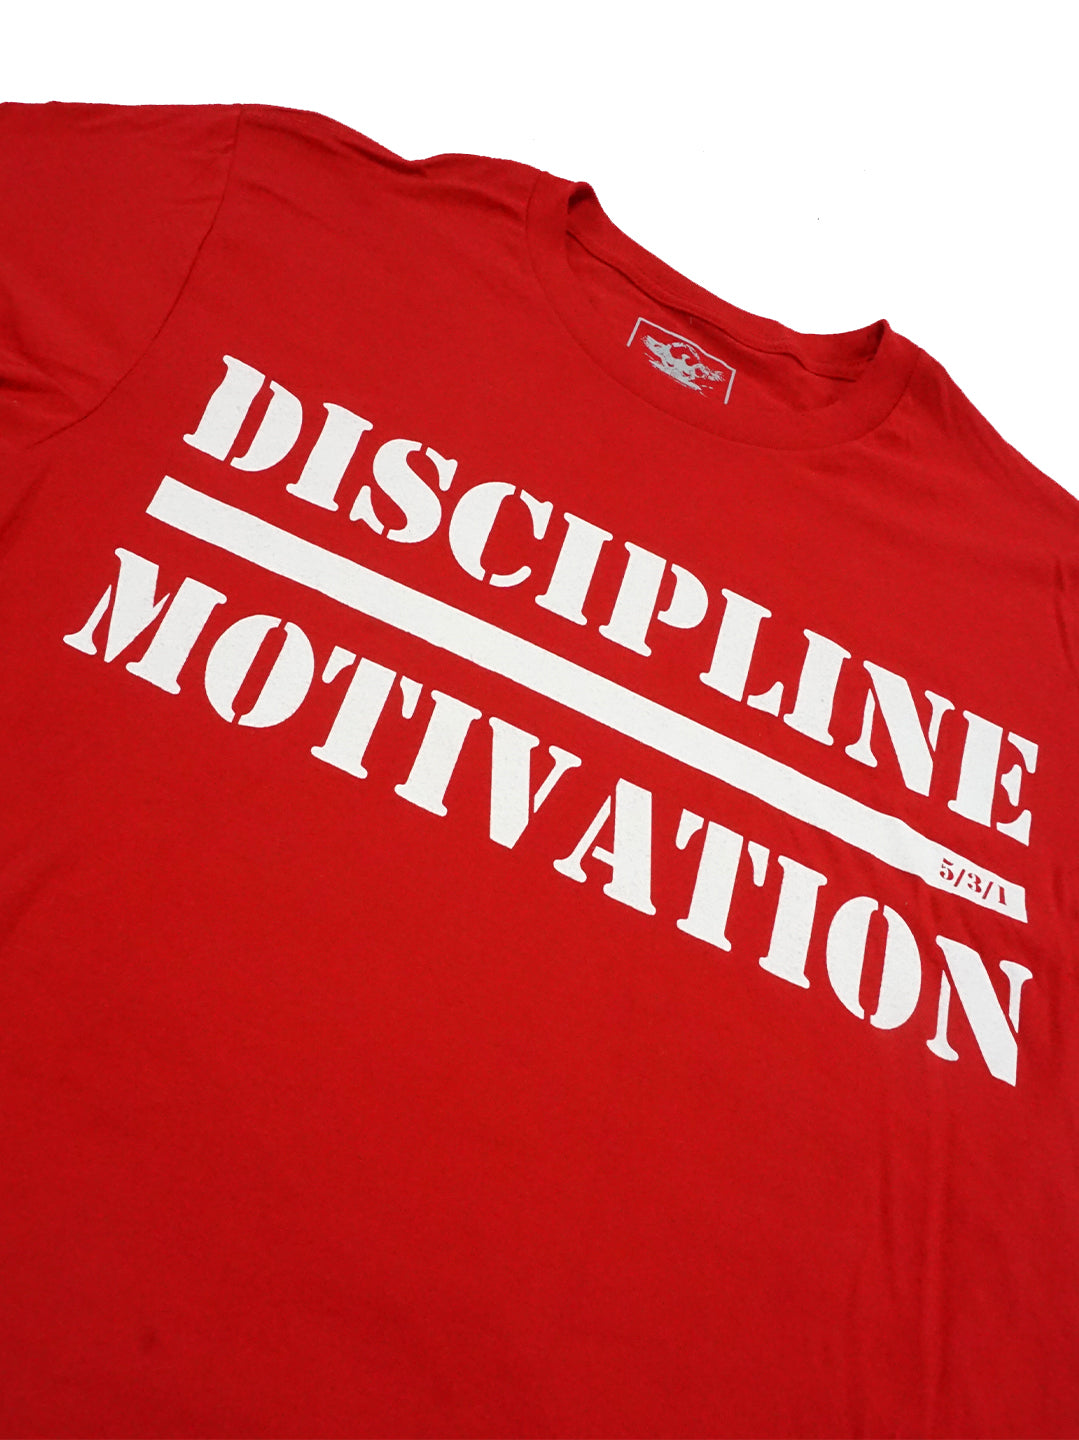 Discipline Over Motivation Tee Red/Wht